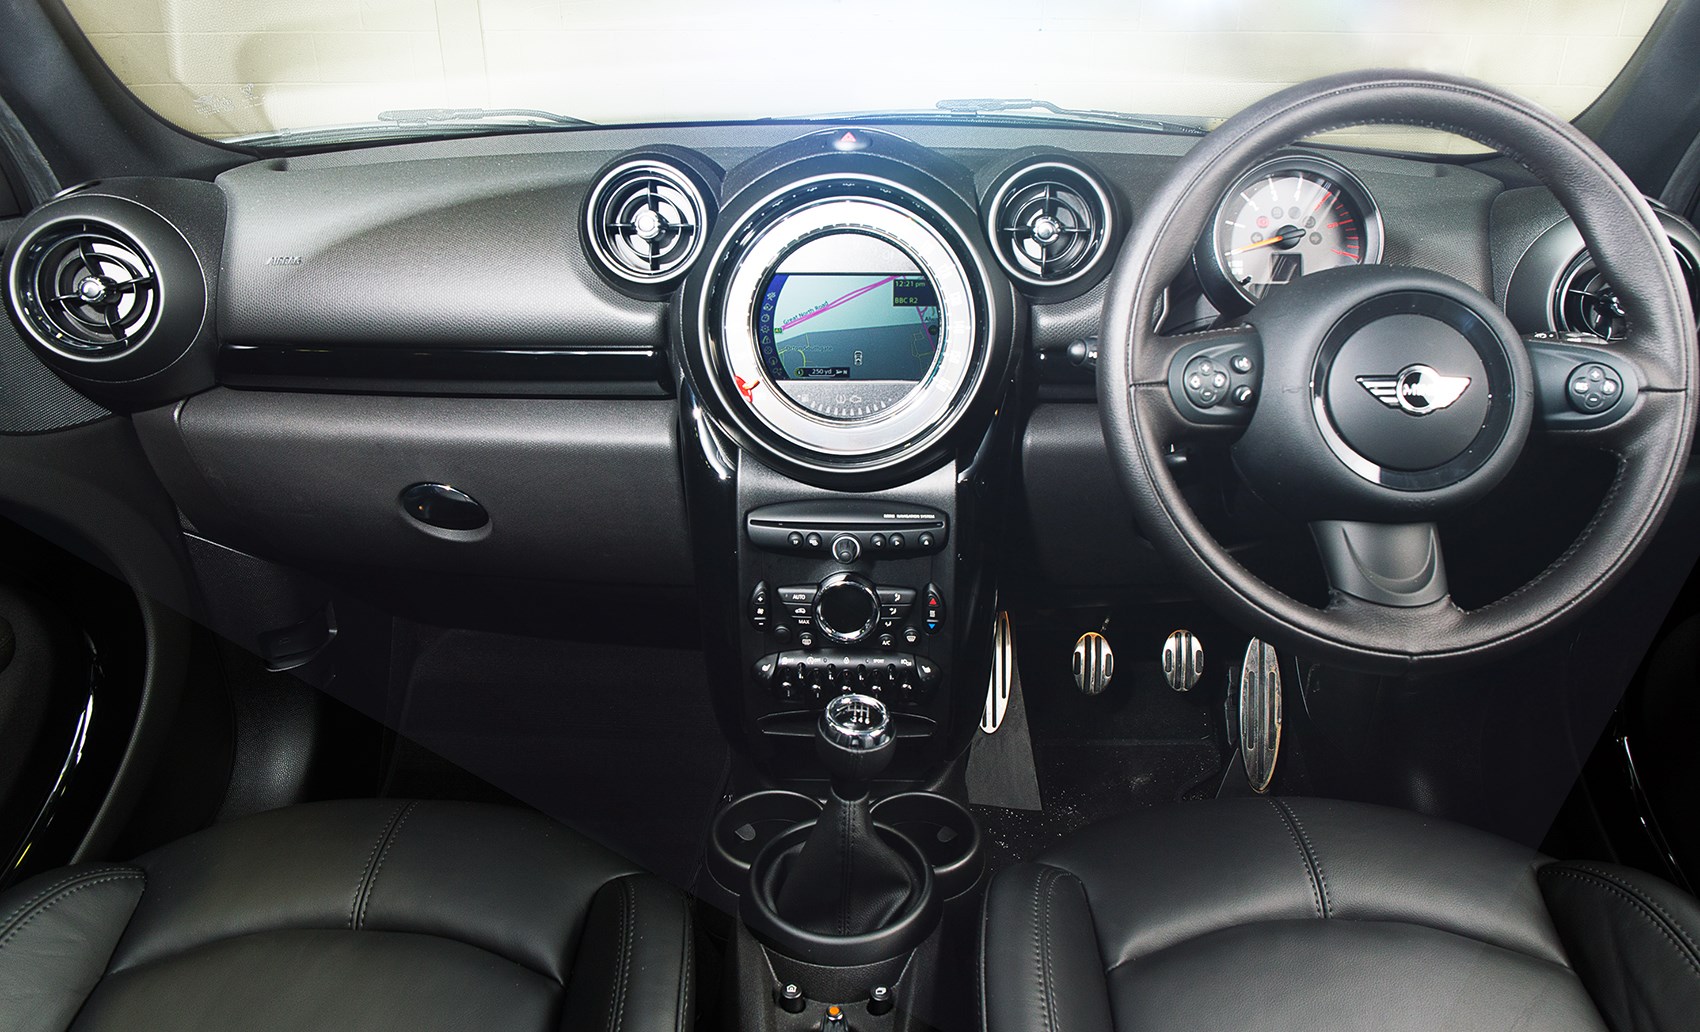 Icon Buyer New Mini Countryman Vs Used Range Rover Evoque